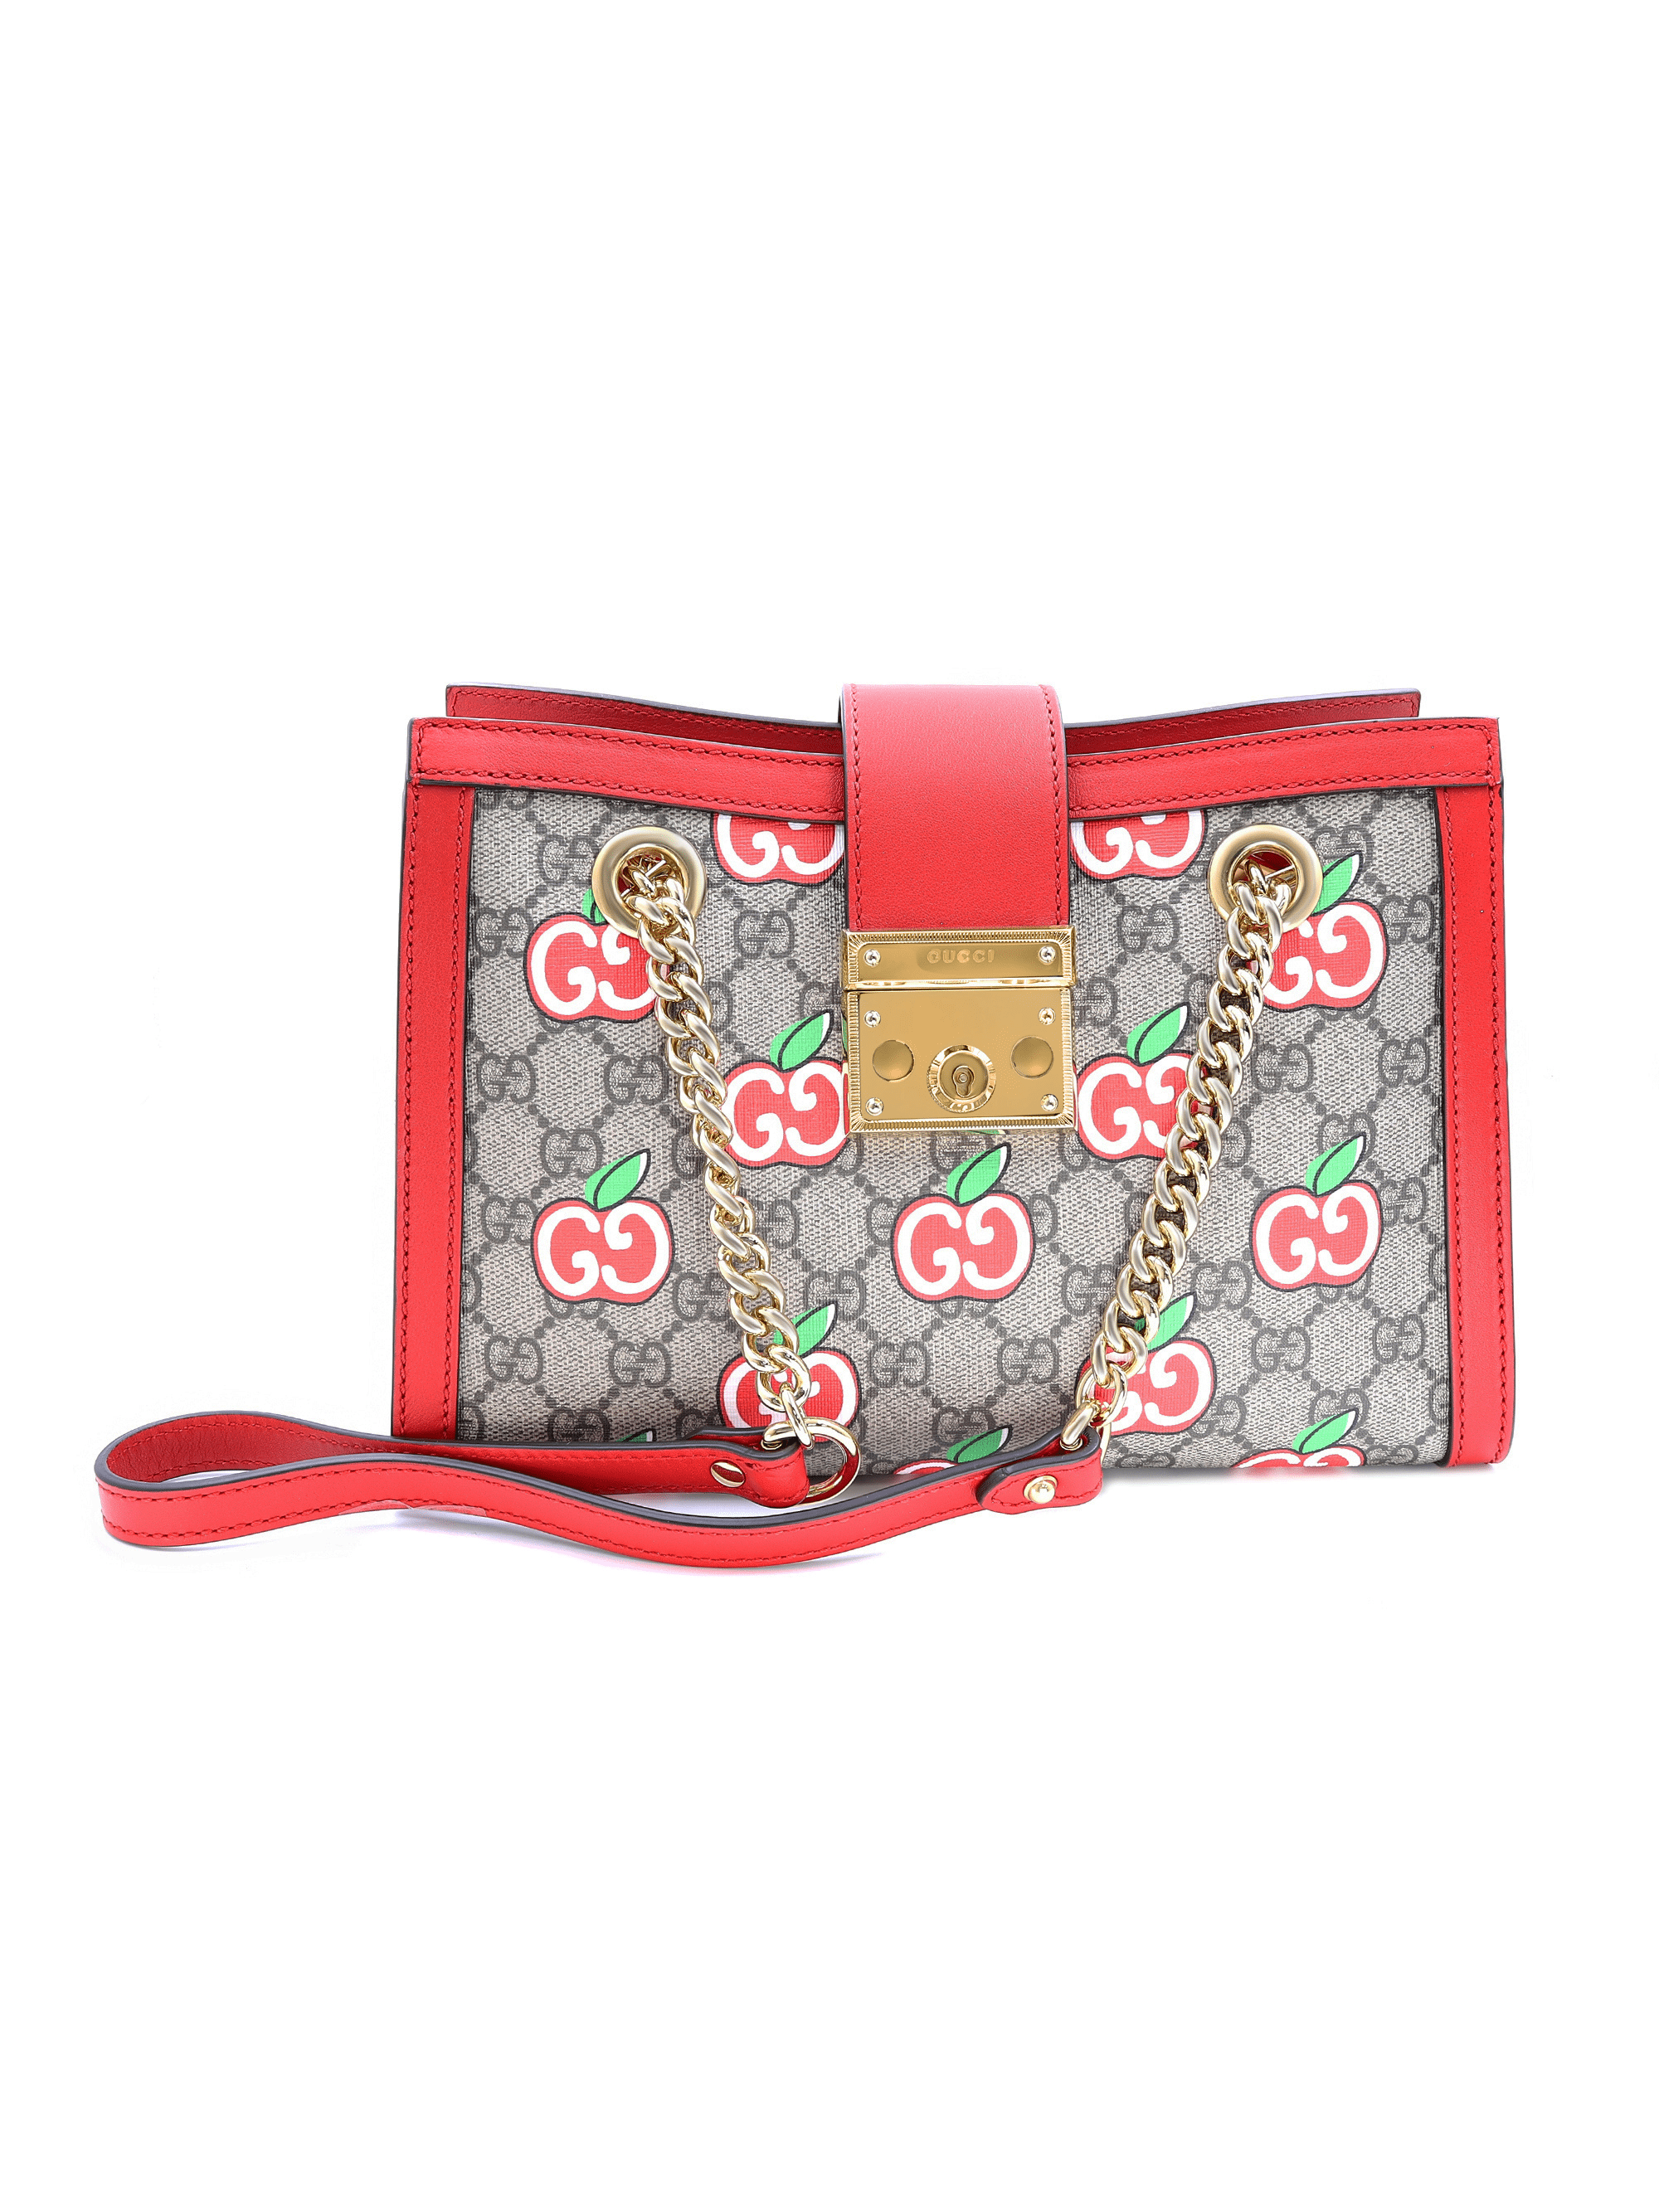 Gucci Small Soho Disco Bag Rose Beige Patent Leather crossbody purse | eBay